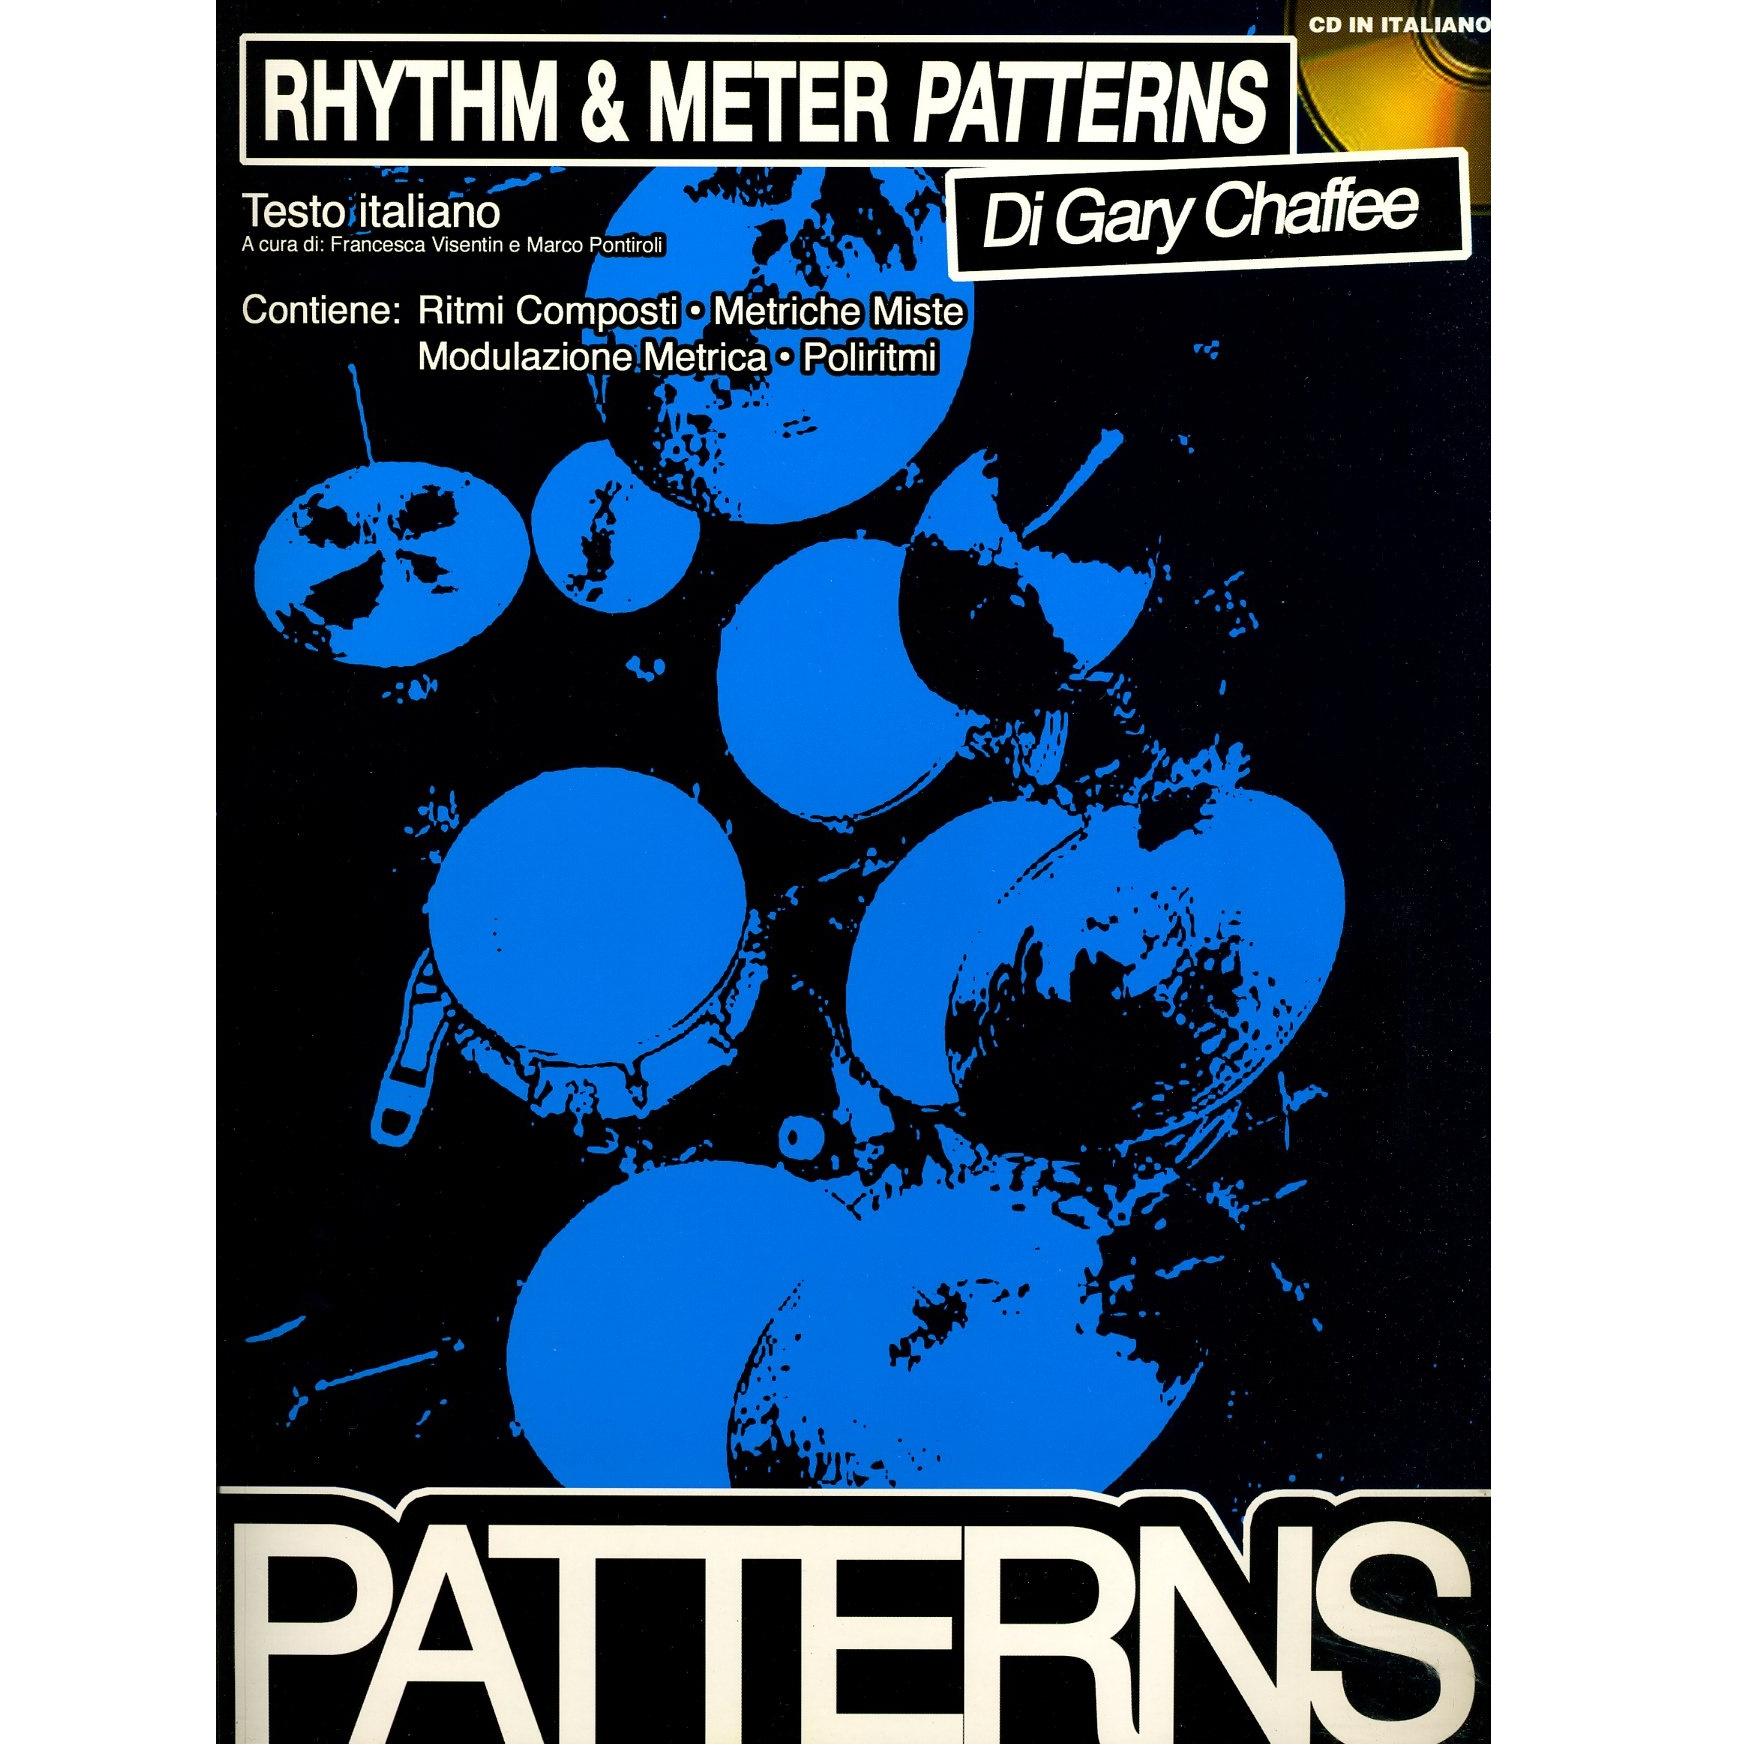 Rhythm & Meter Patterns di Gary Chaffee - Patterns